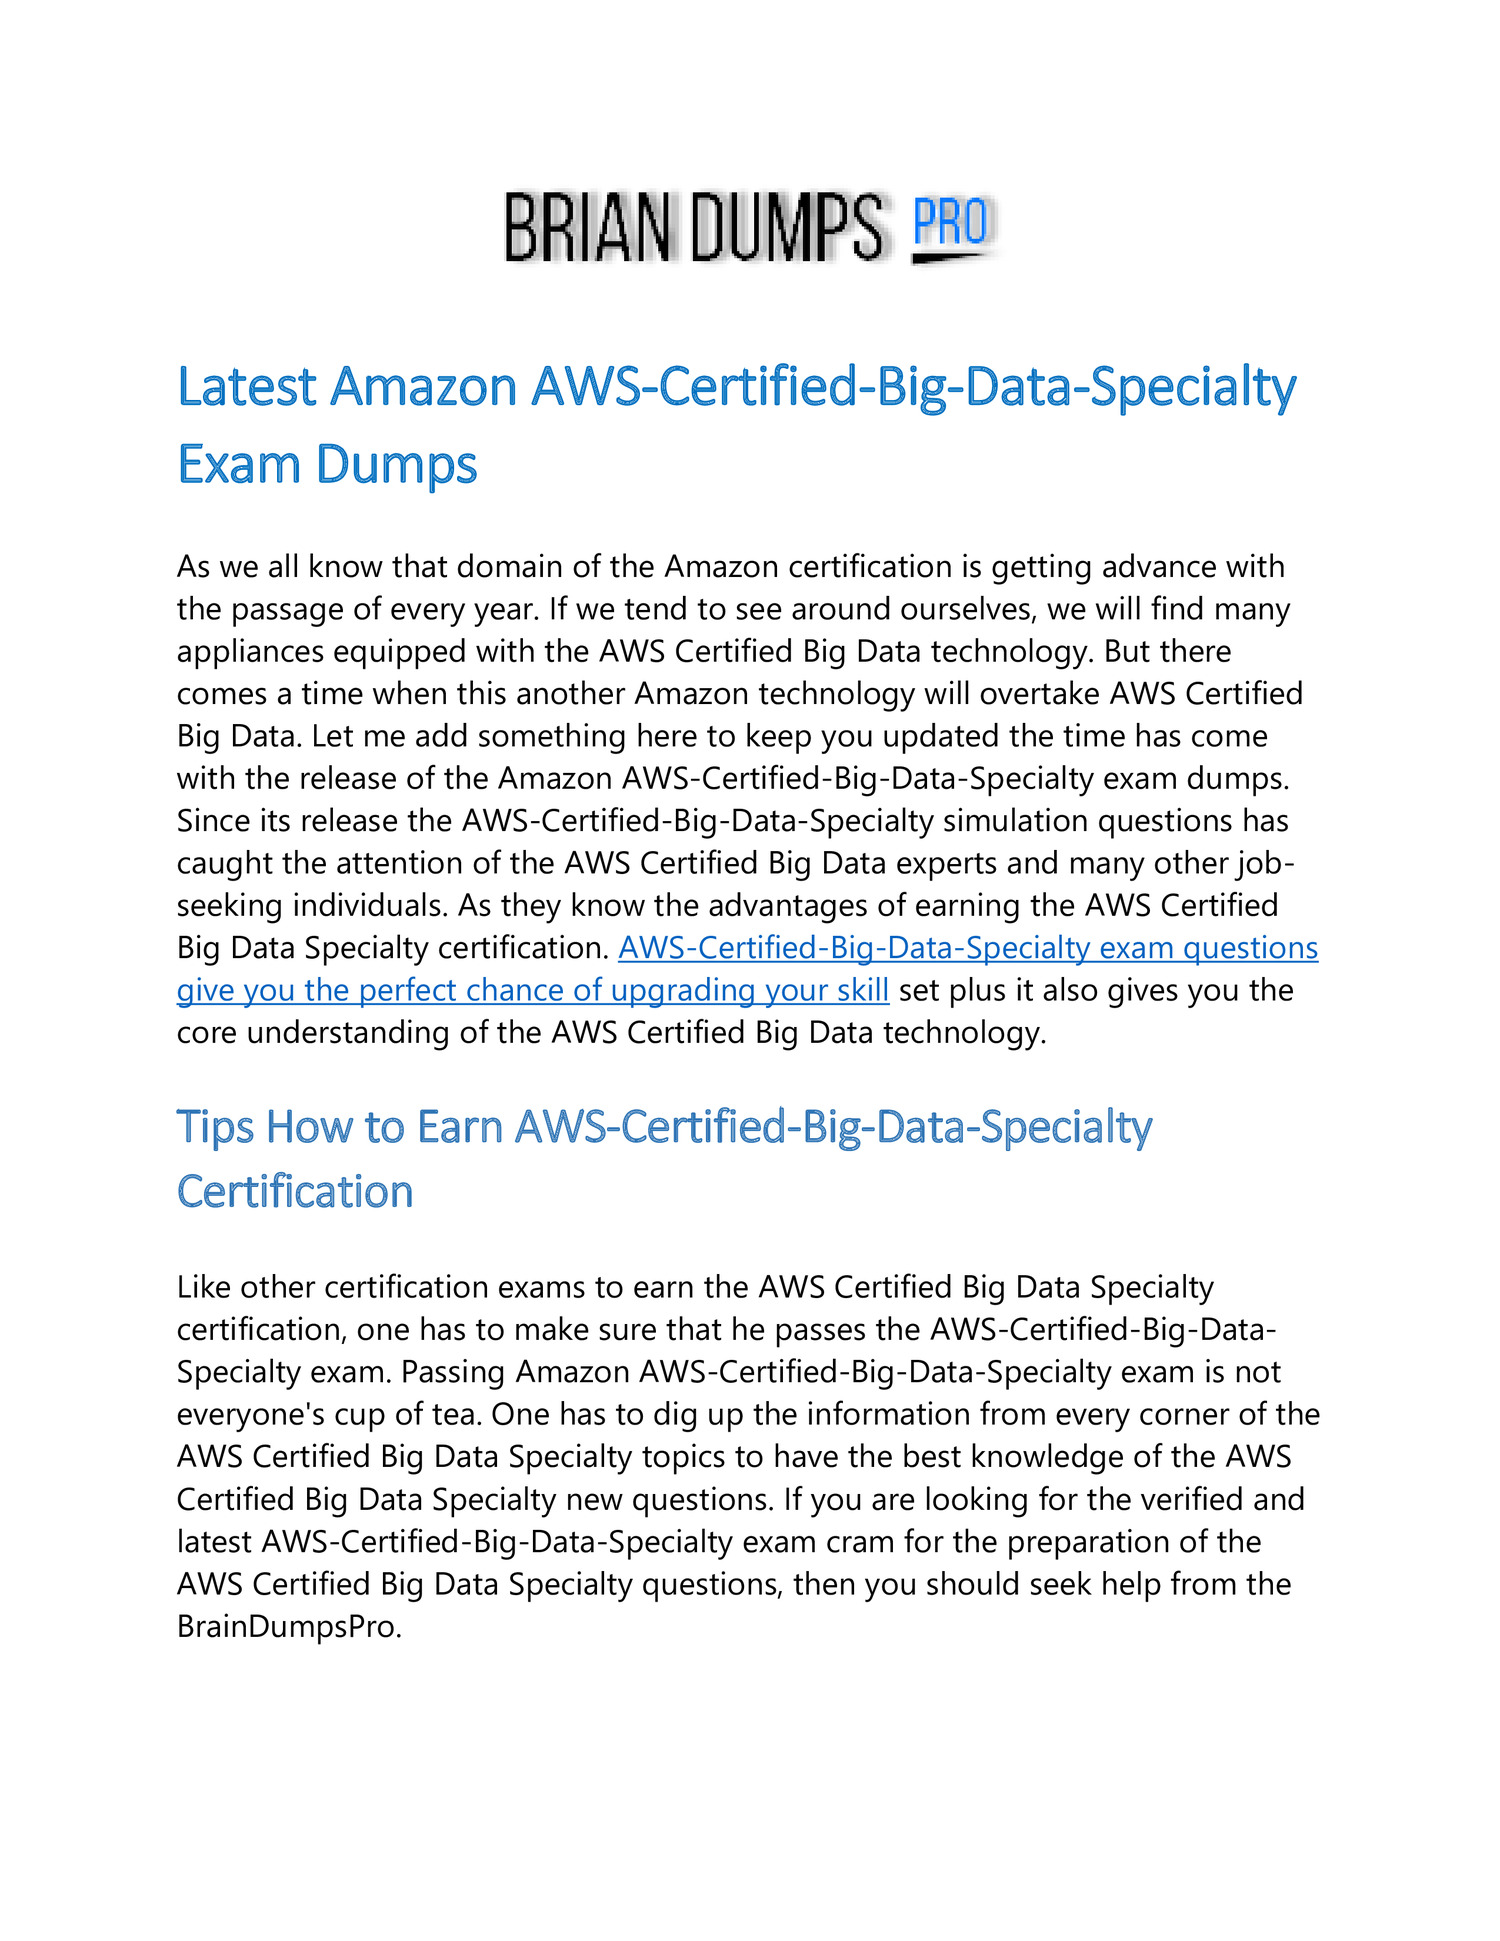 AWS-Certified-Data-Analytics-Specialty Exam Fragen